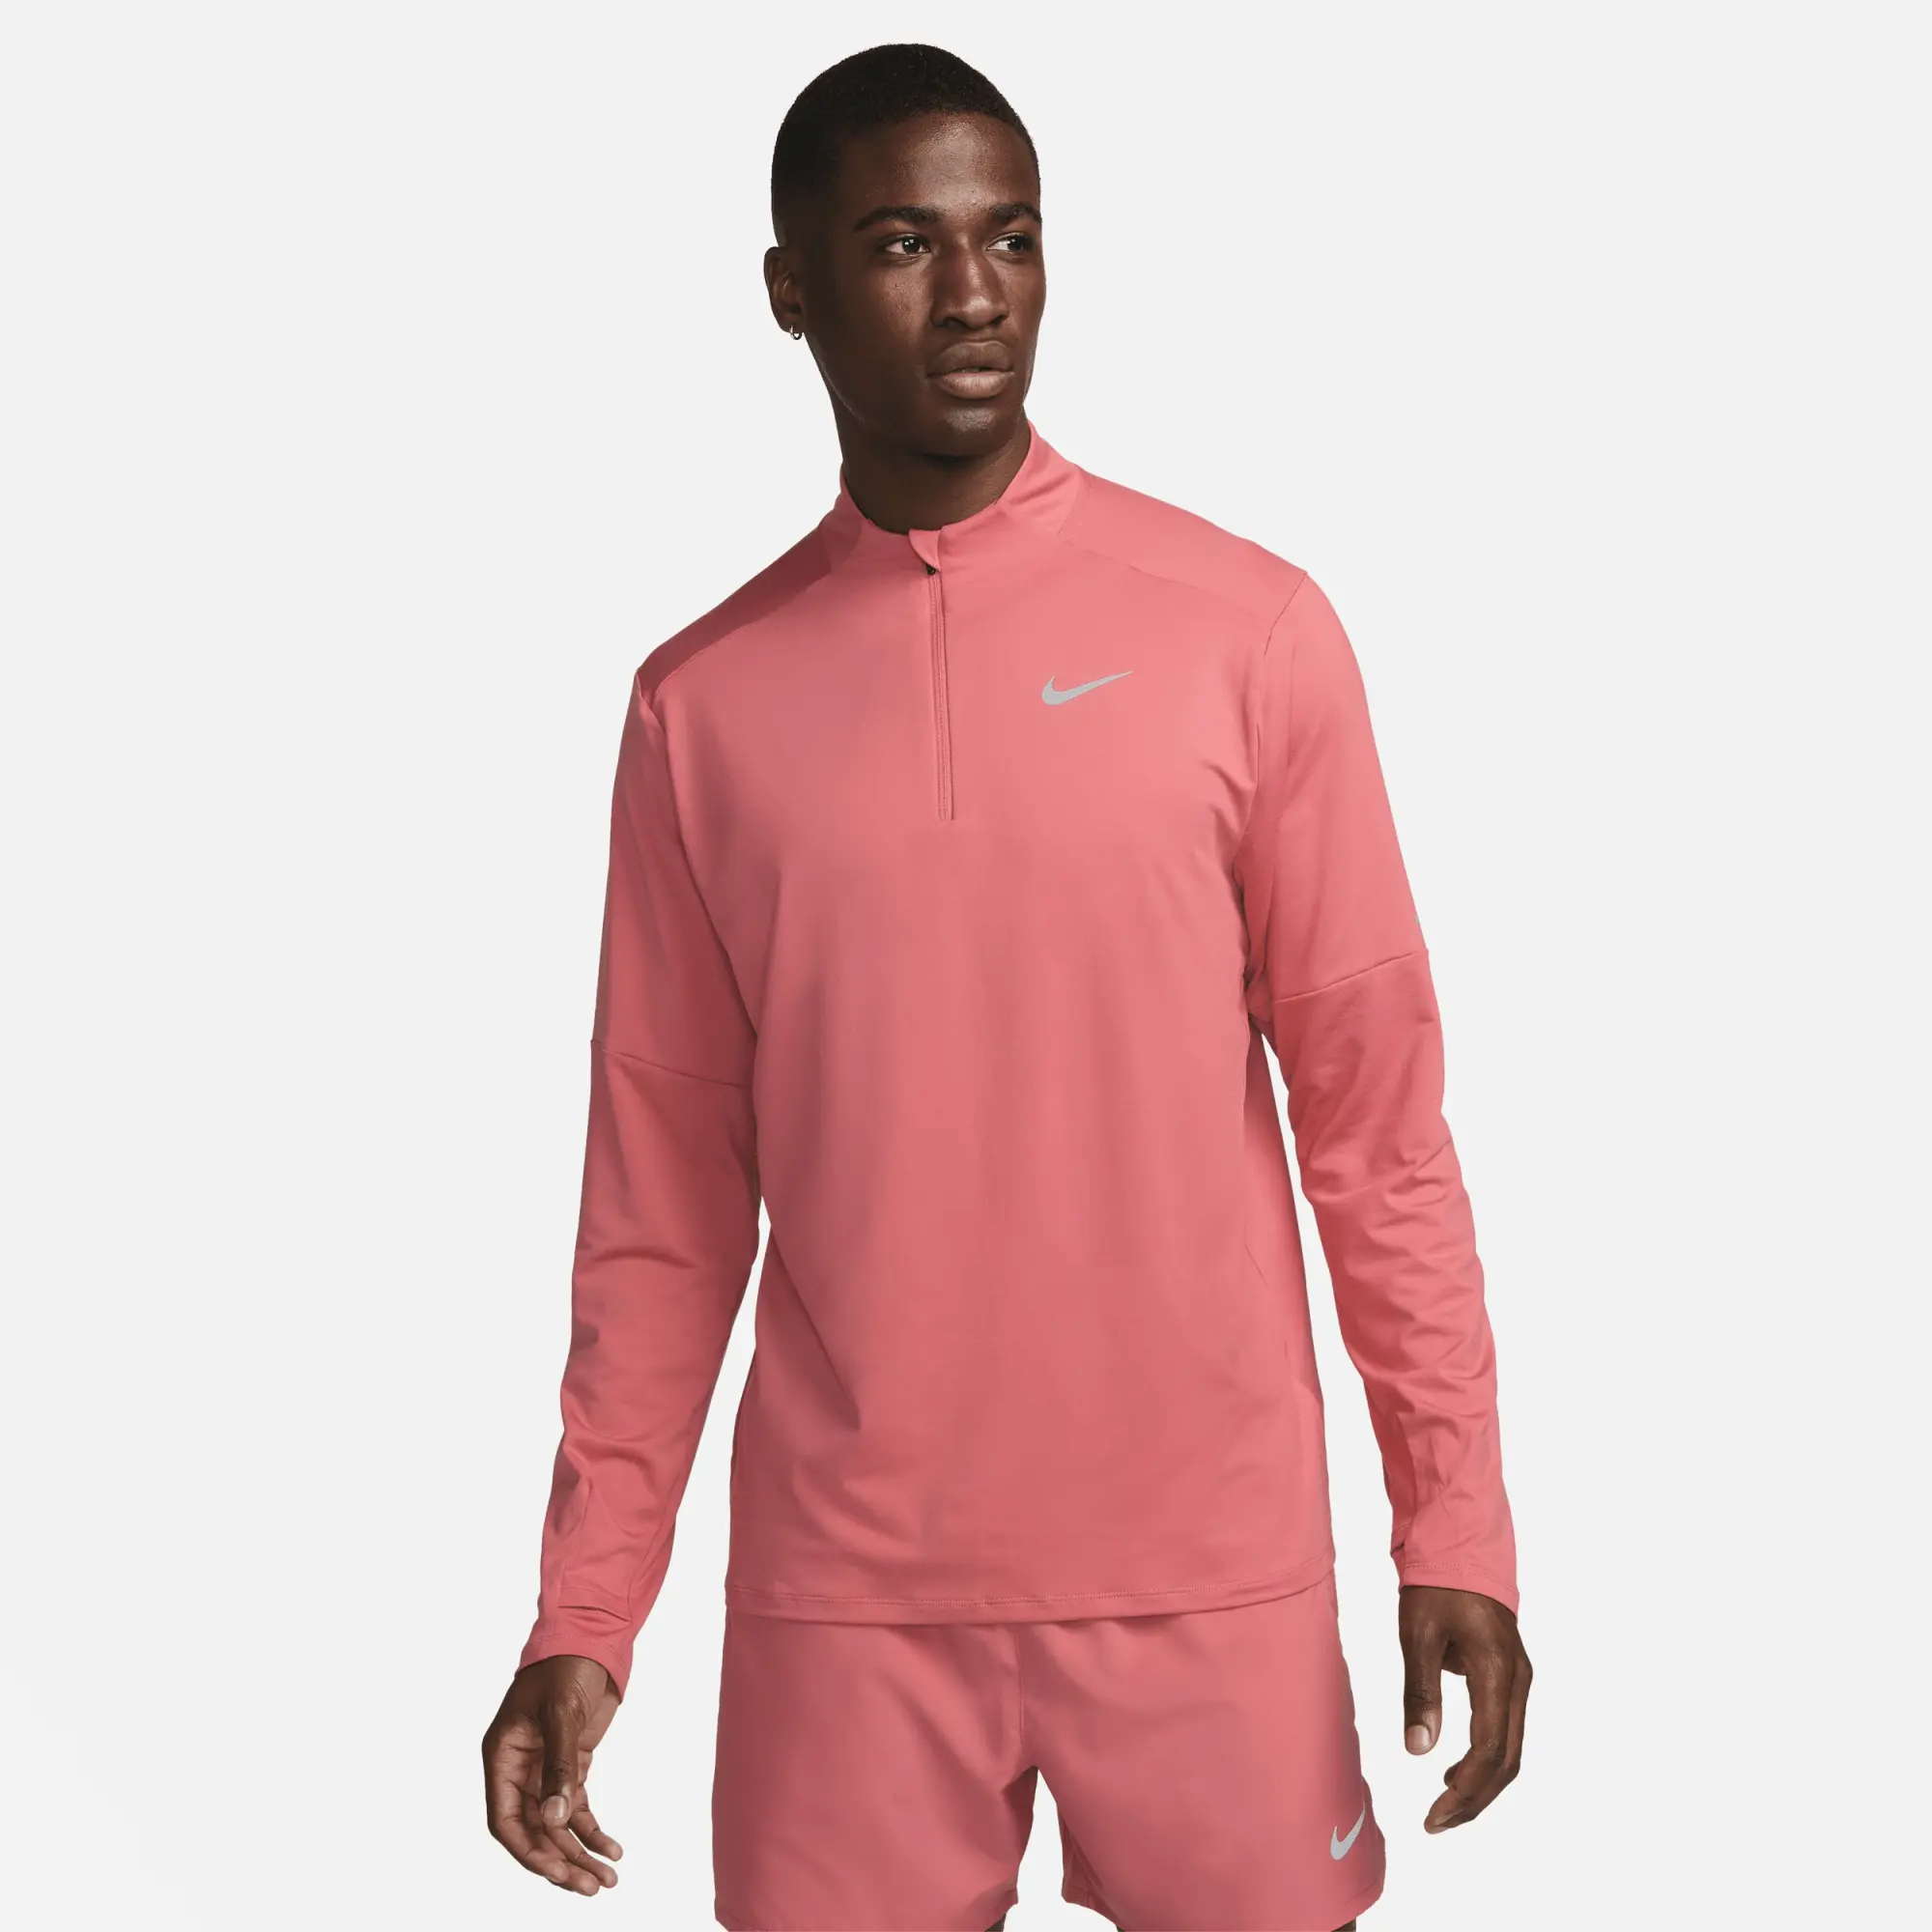 Nike Element 1/4 Zip Top - Pink - Mens